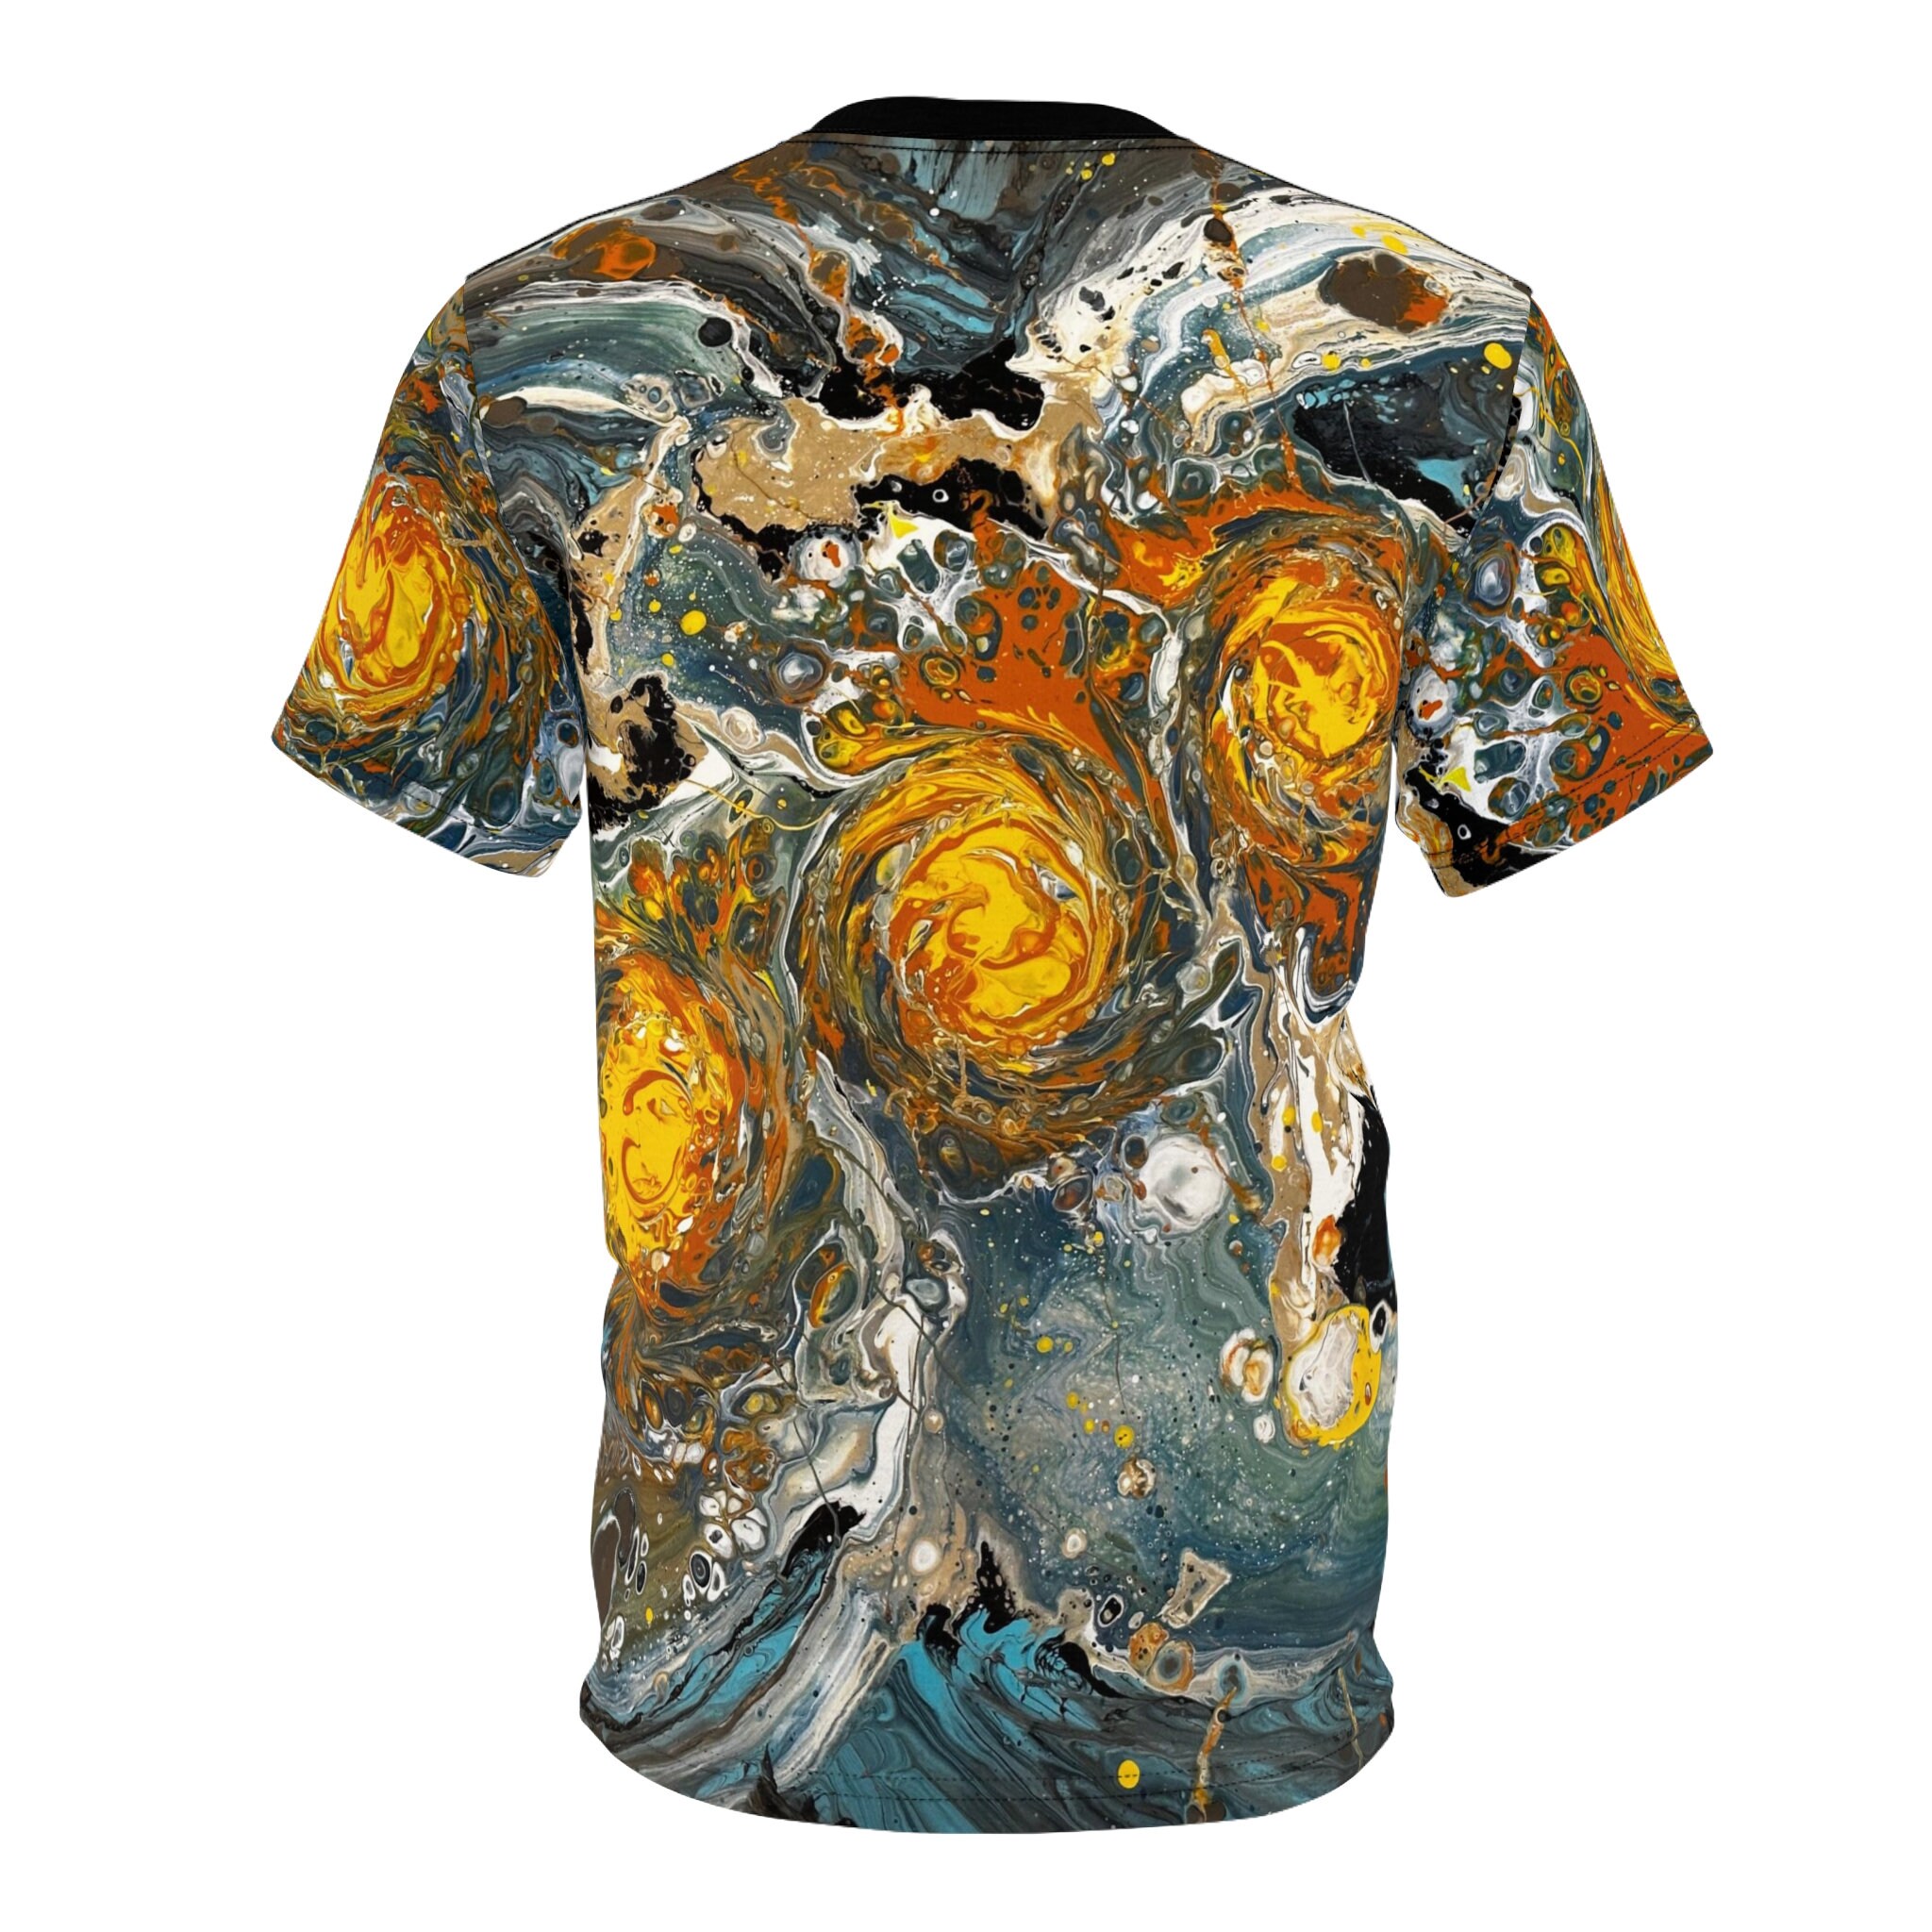 Discover Hurricane - AOP Painting Artistic Fluid Art Abstract 3D T-Shirt